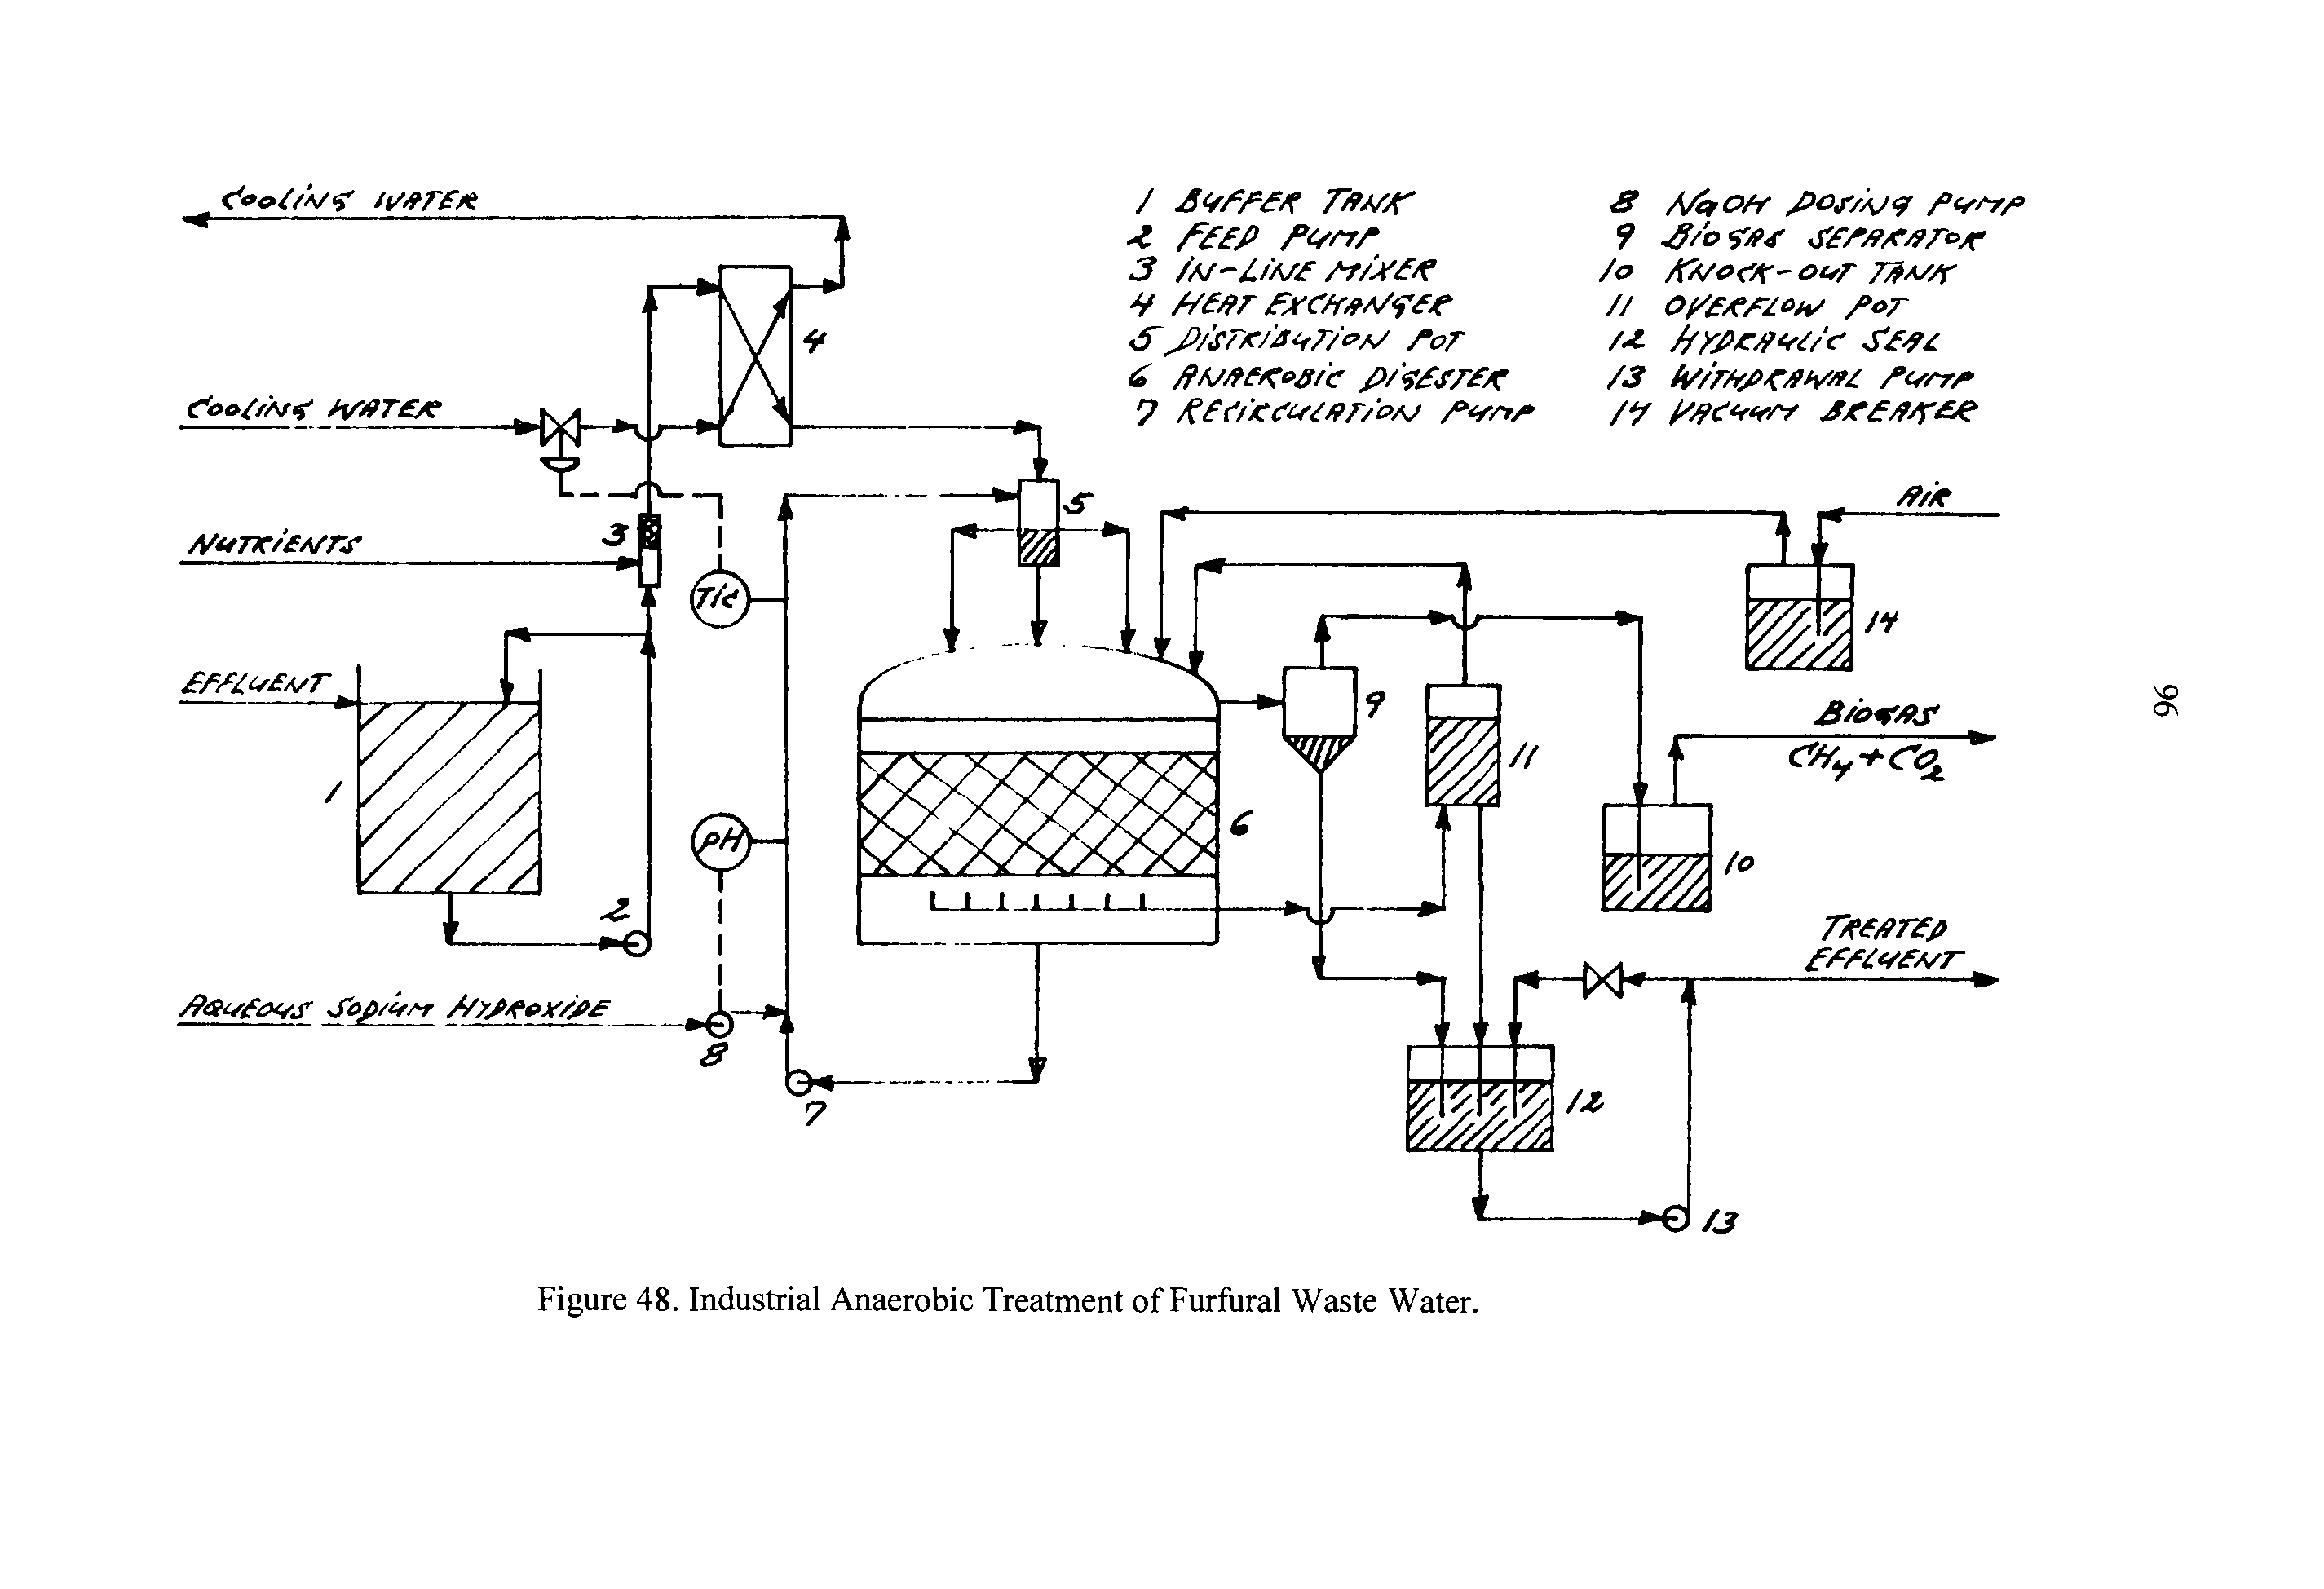 Figure 48. Industrial Anaerobic Treatment of Furfural Waste Water.